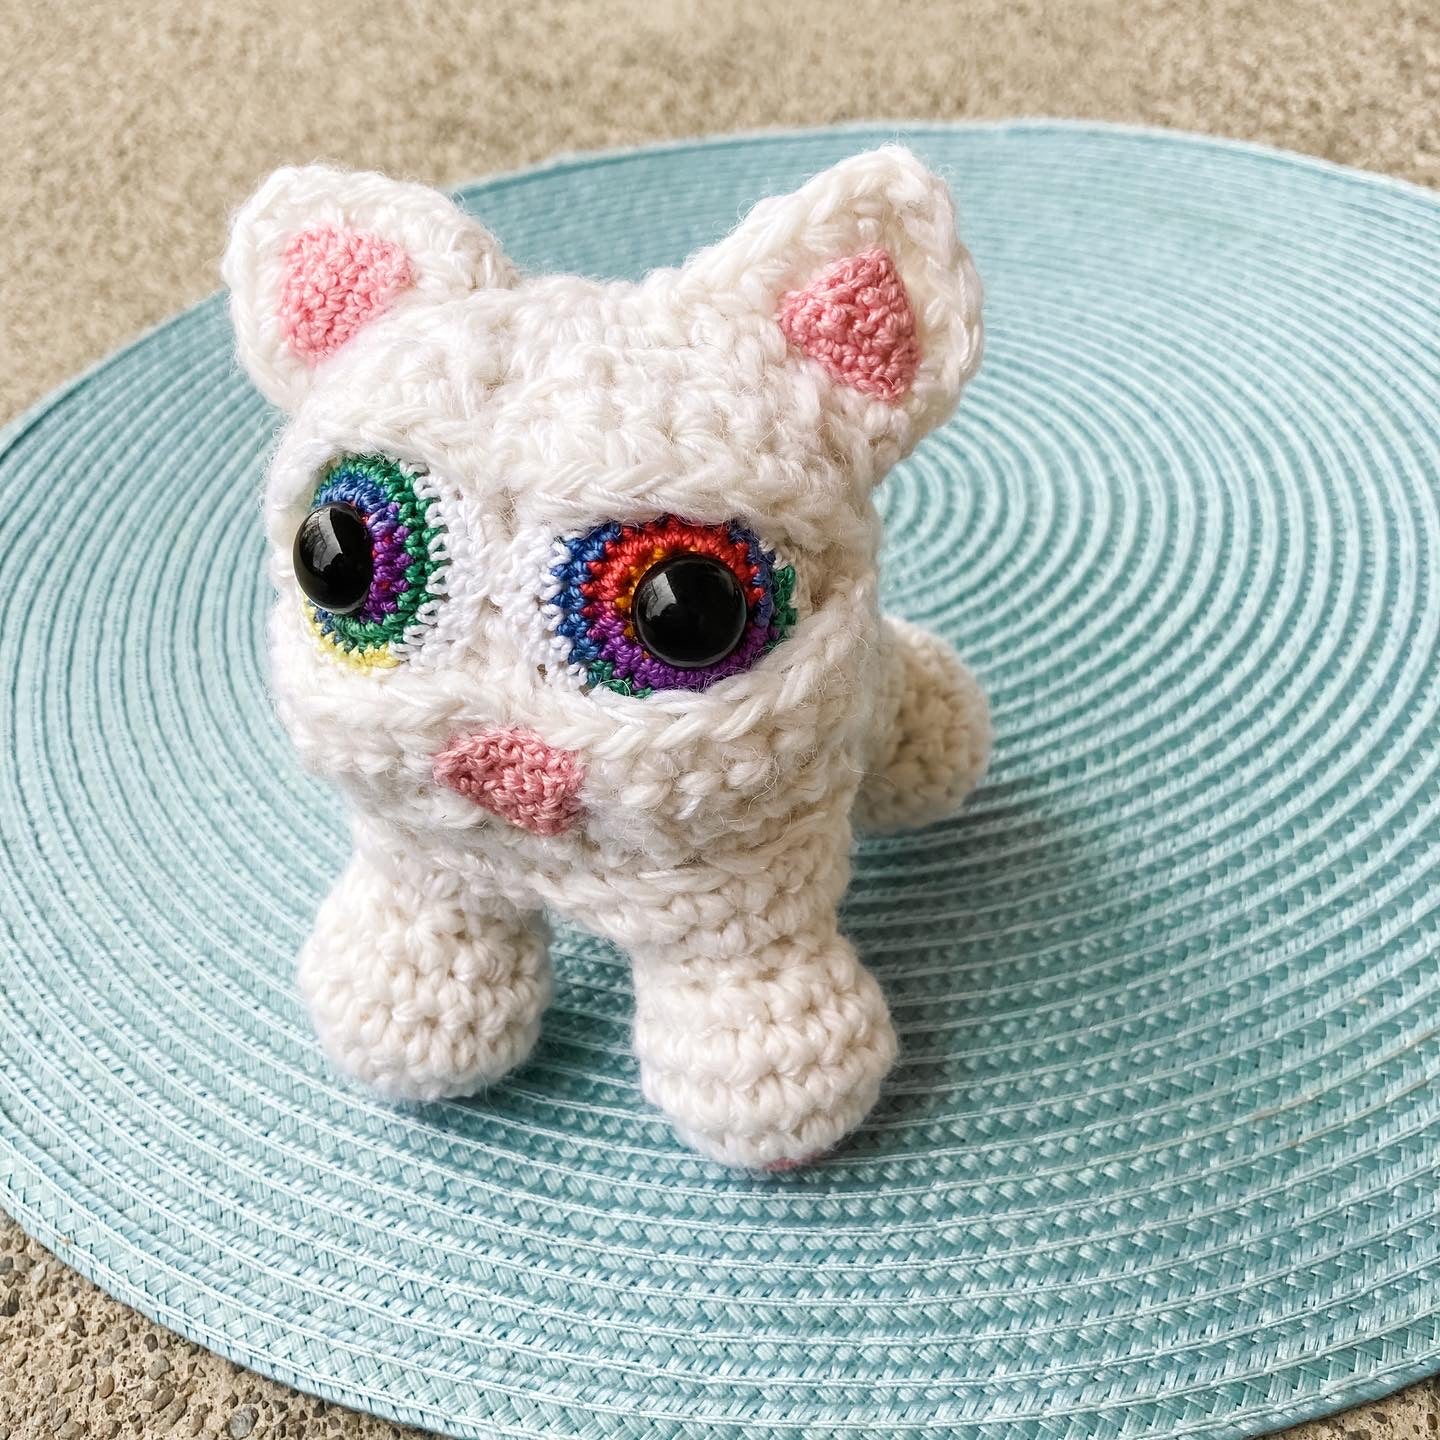 DIY Pretty Kitty Cat Doll Crochet Pattern Kit